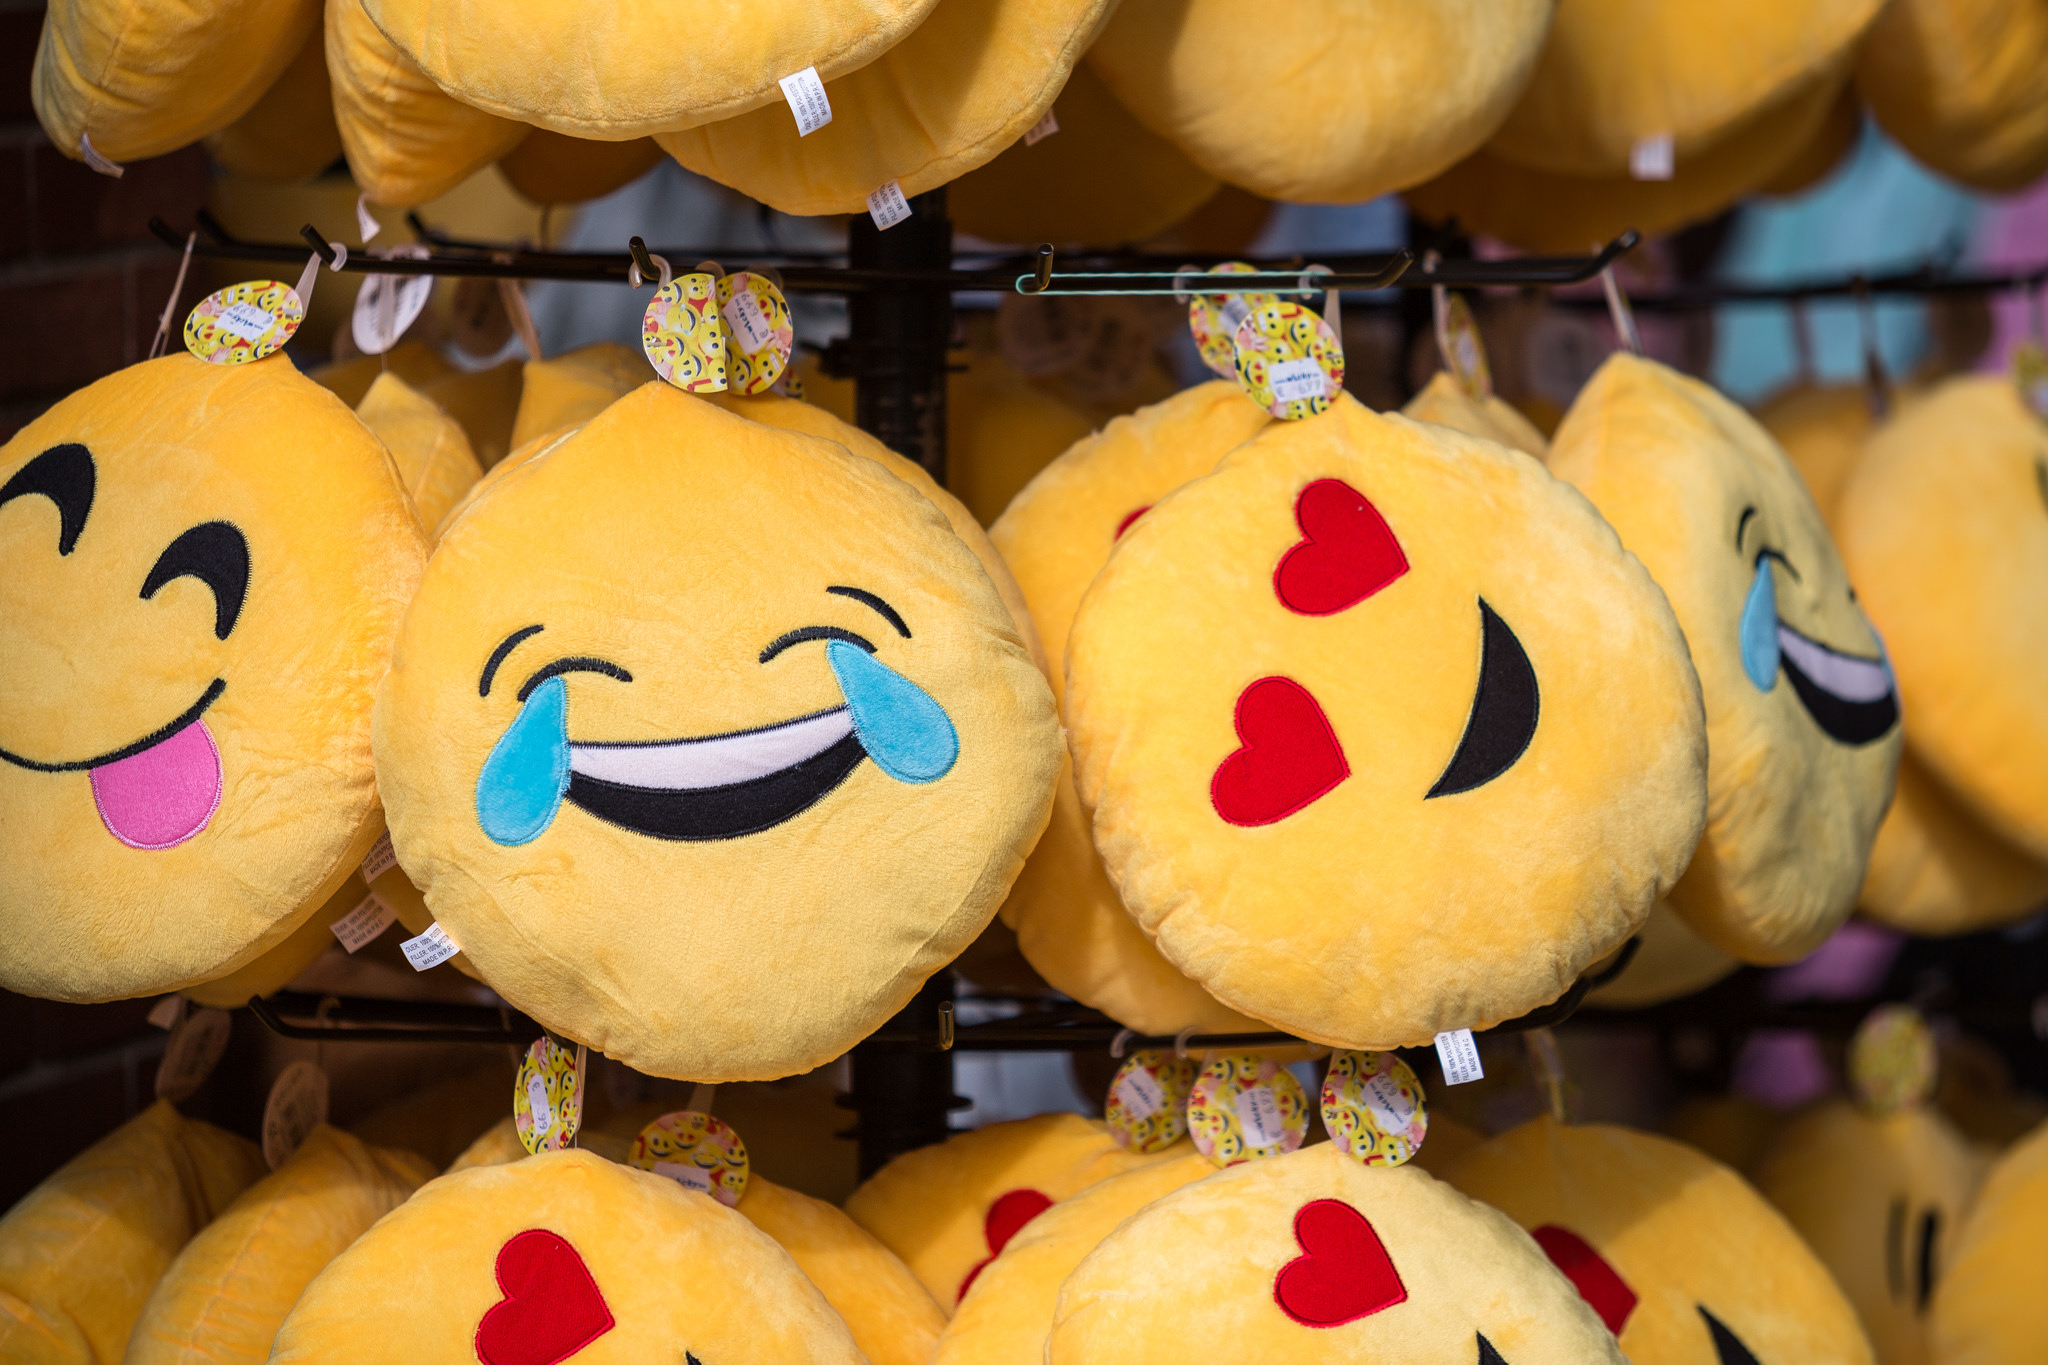 800 Whatsapp iPhone Laptop Emoji Emoticon Smiley Face Stickers